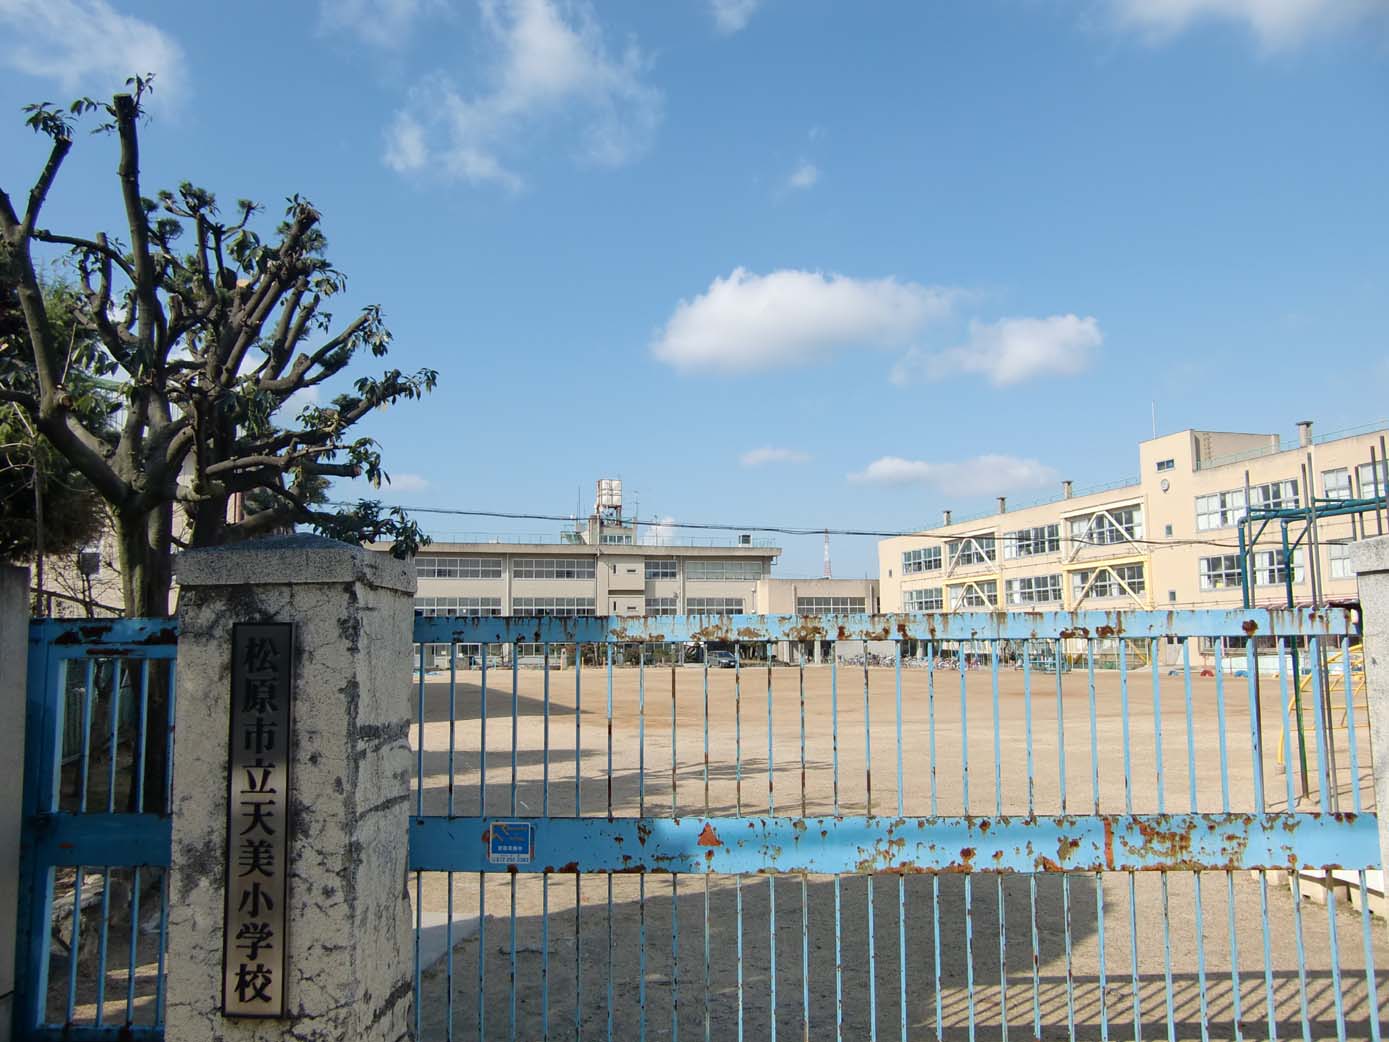 Primary school. Matsubara Municipal Amamiminami to elementary school (elementary school) 452m